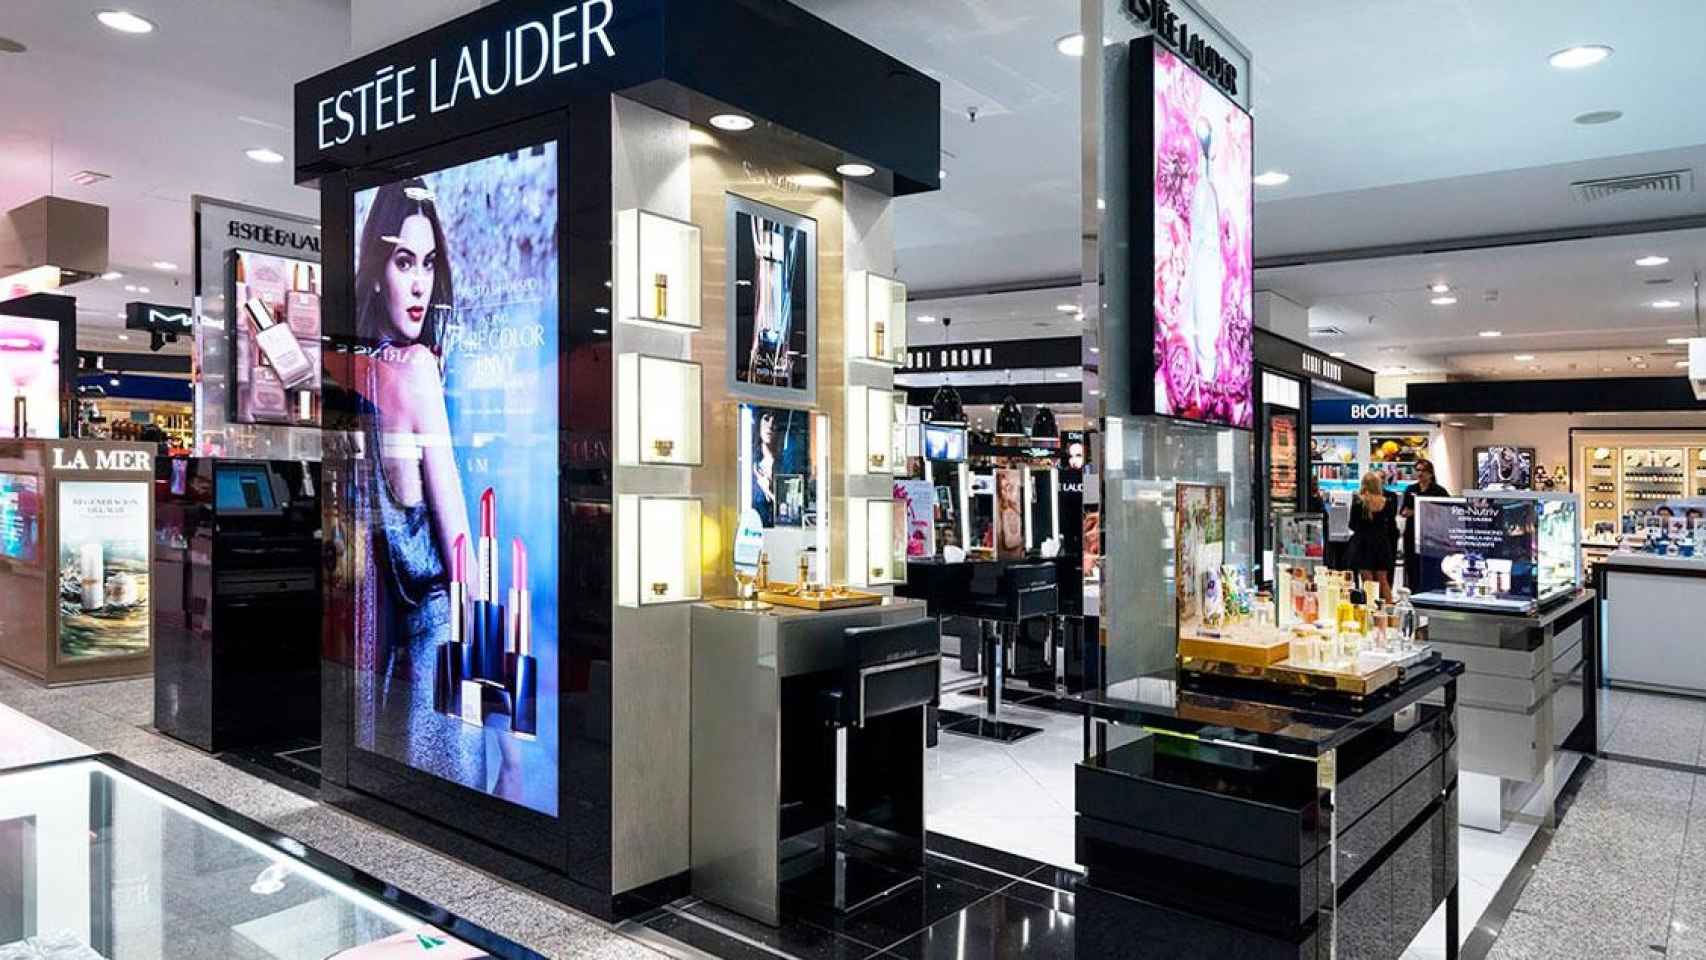 Un estand de Estée Lauder en un centro comercial / CG